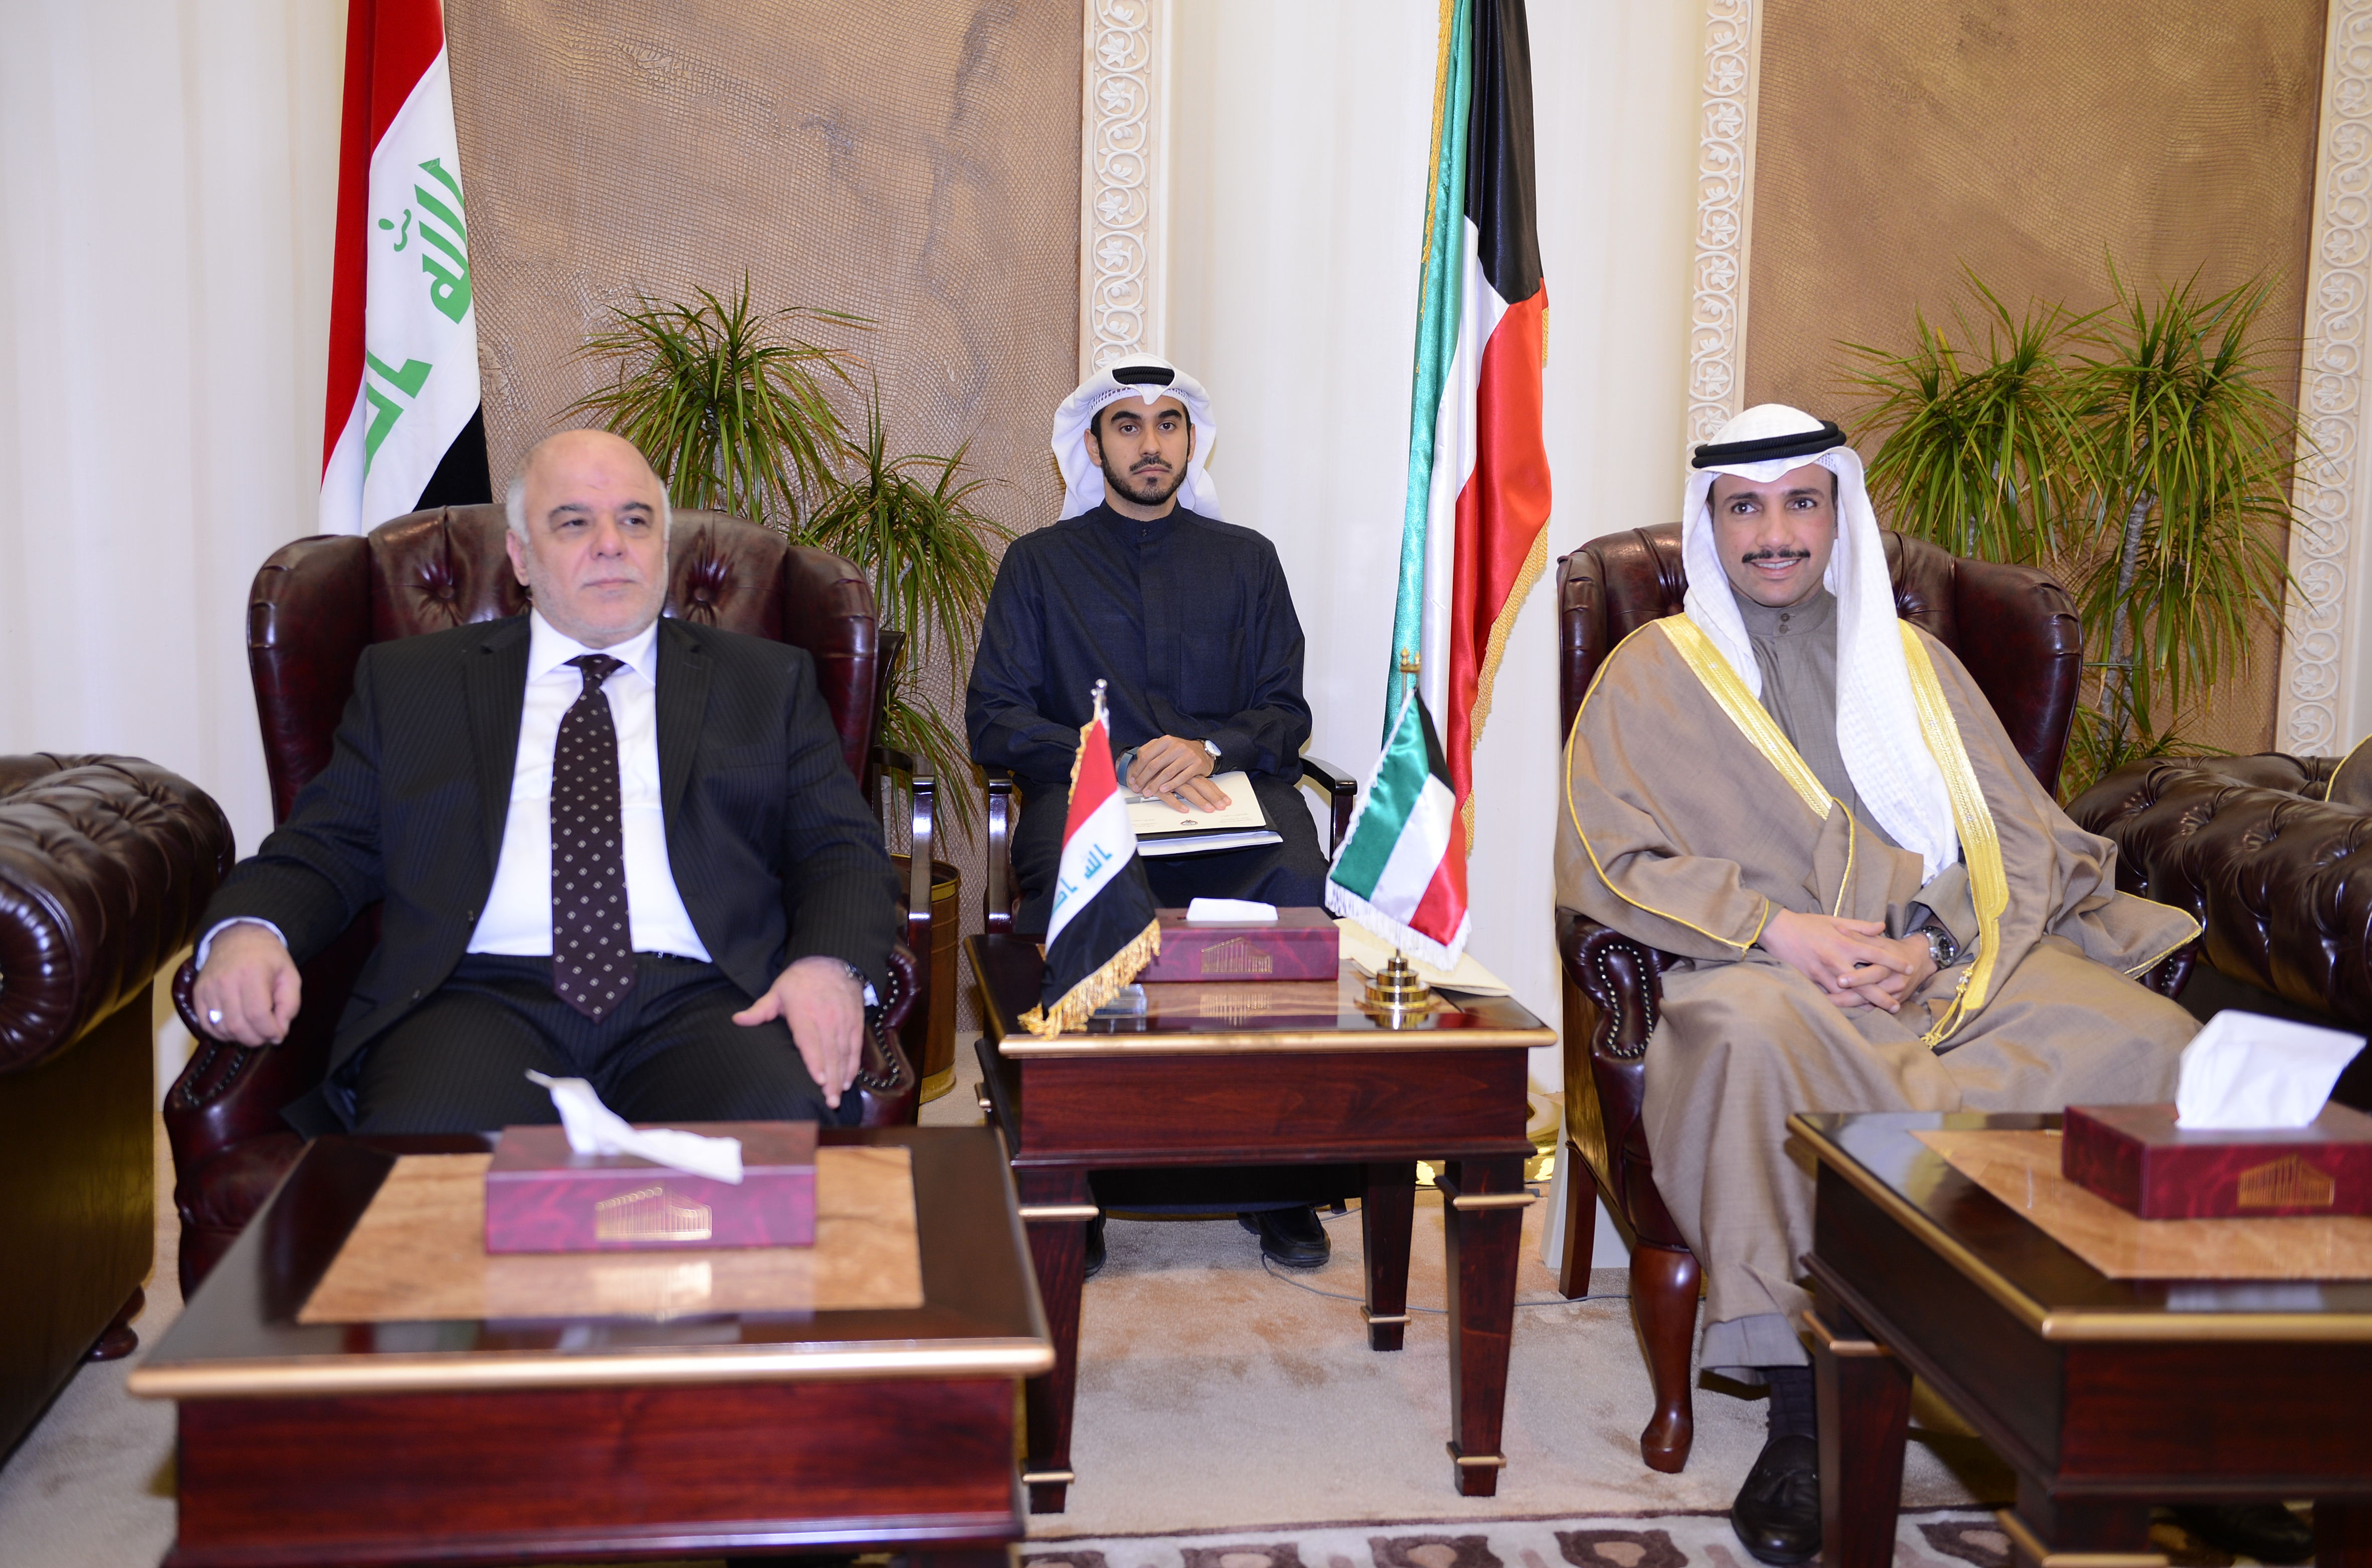 Speaker of the National Assembly Marzouq Ali Al-Ghanim received Iraqi Prime Minister Haider Al-Abadi